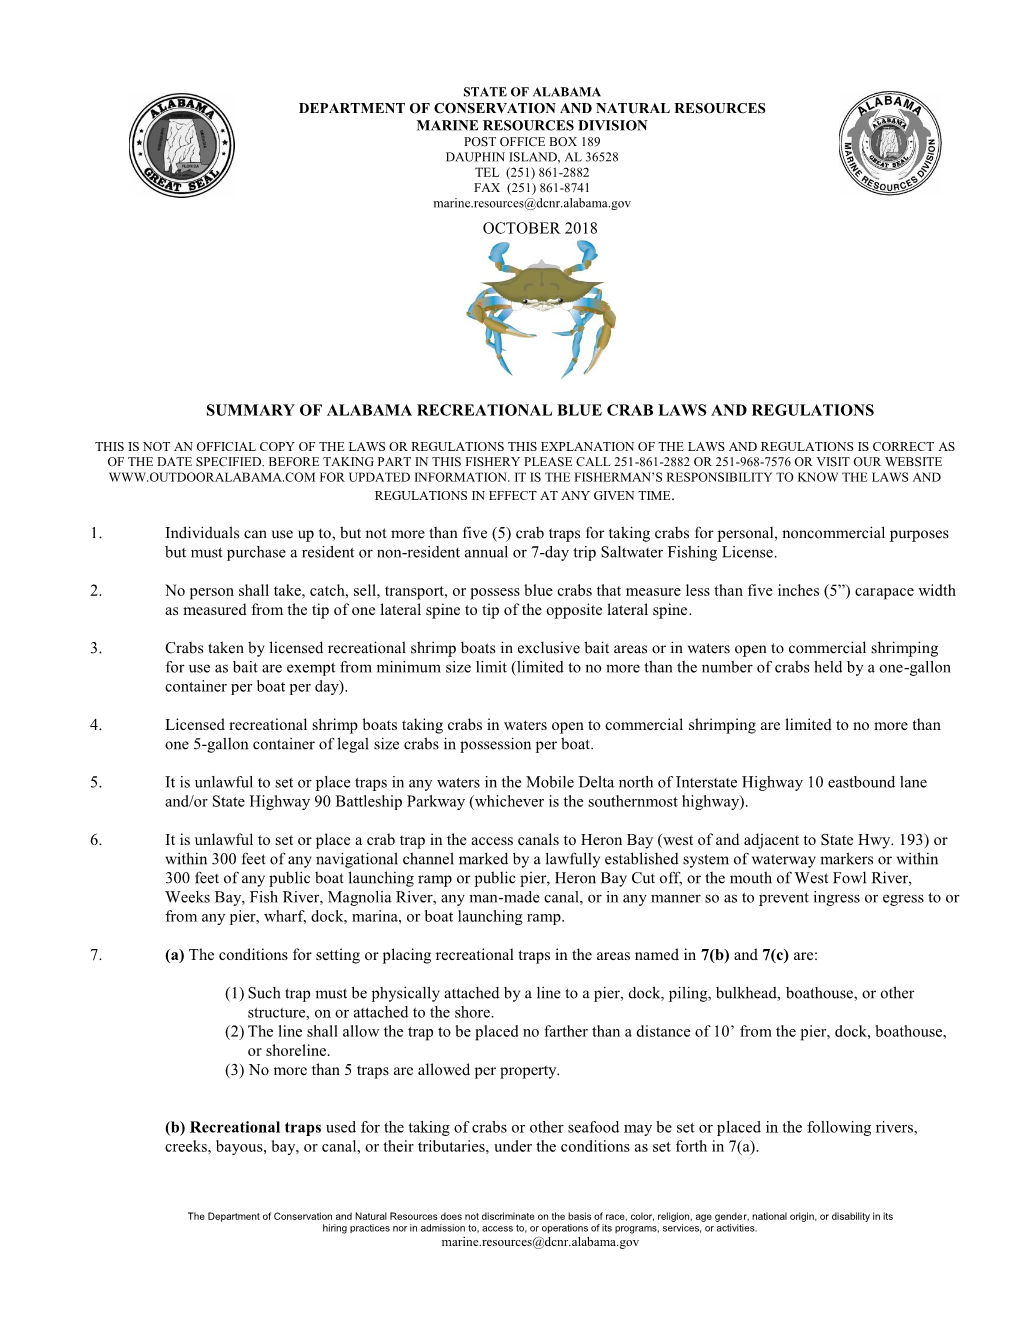 Recreational Blue Crab Regulations